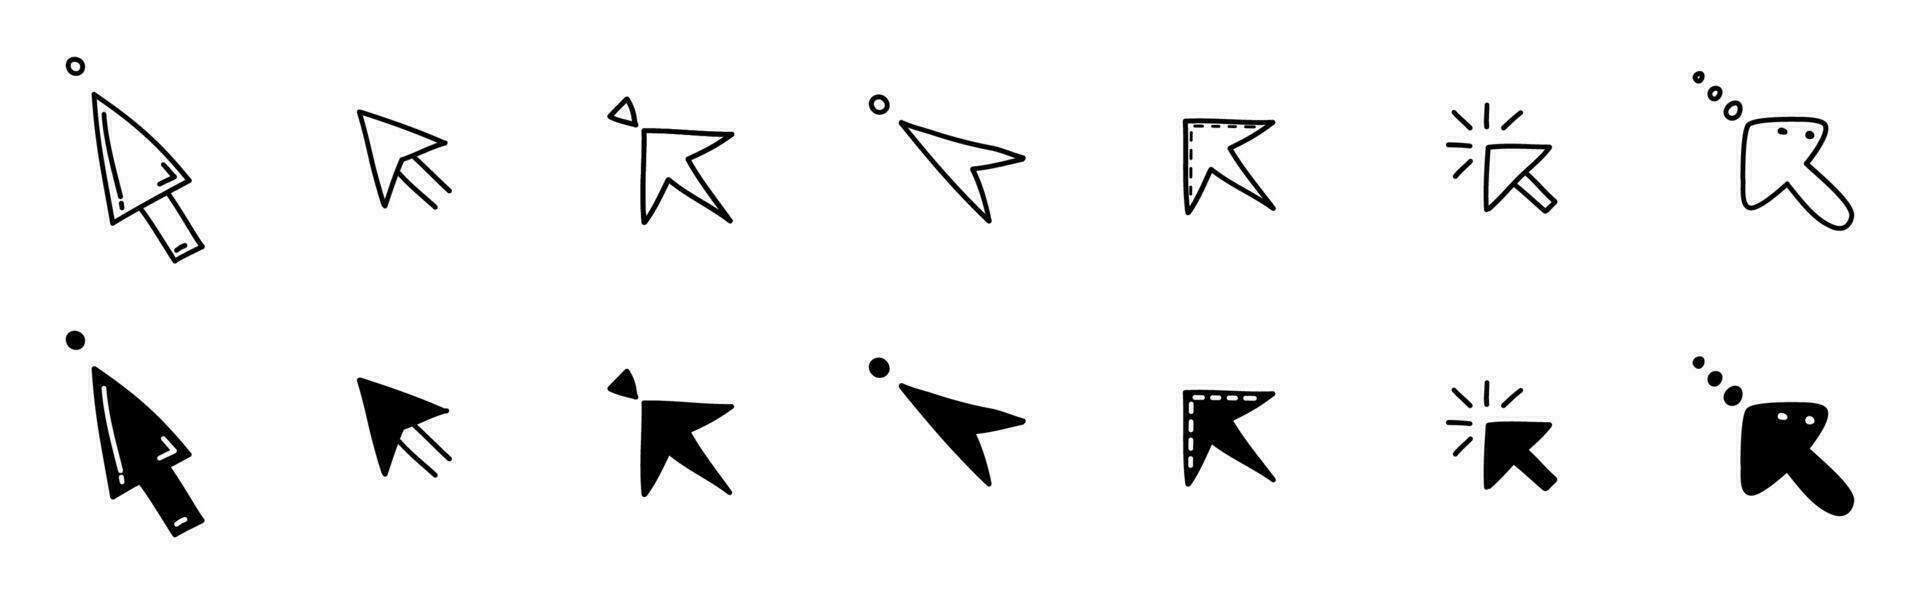 Doodle click icon set. Hand drawn mouse cursor button. Digital arrow pointer for website, computer application. Sketch vector illustration